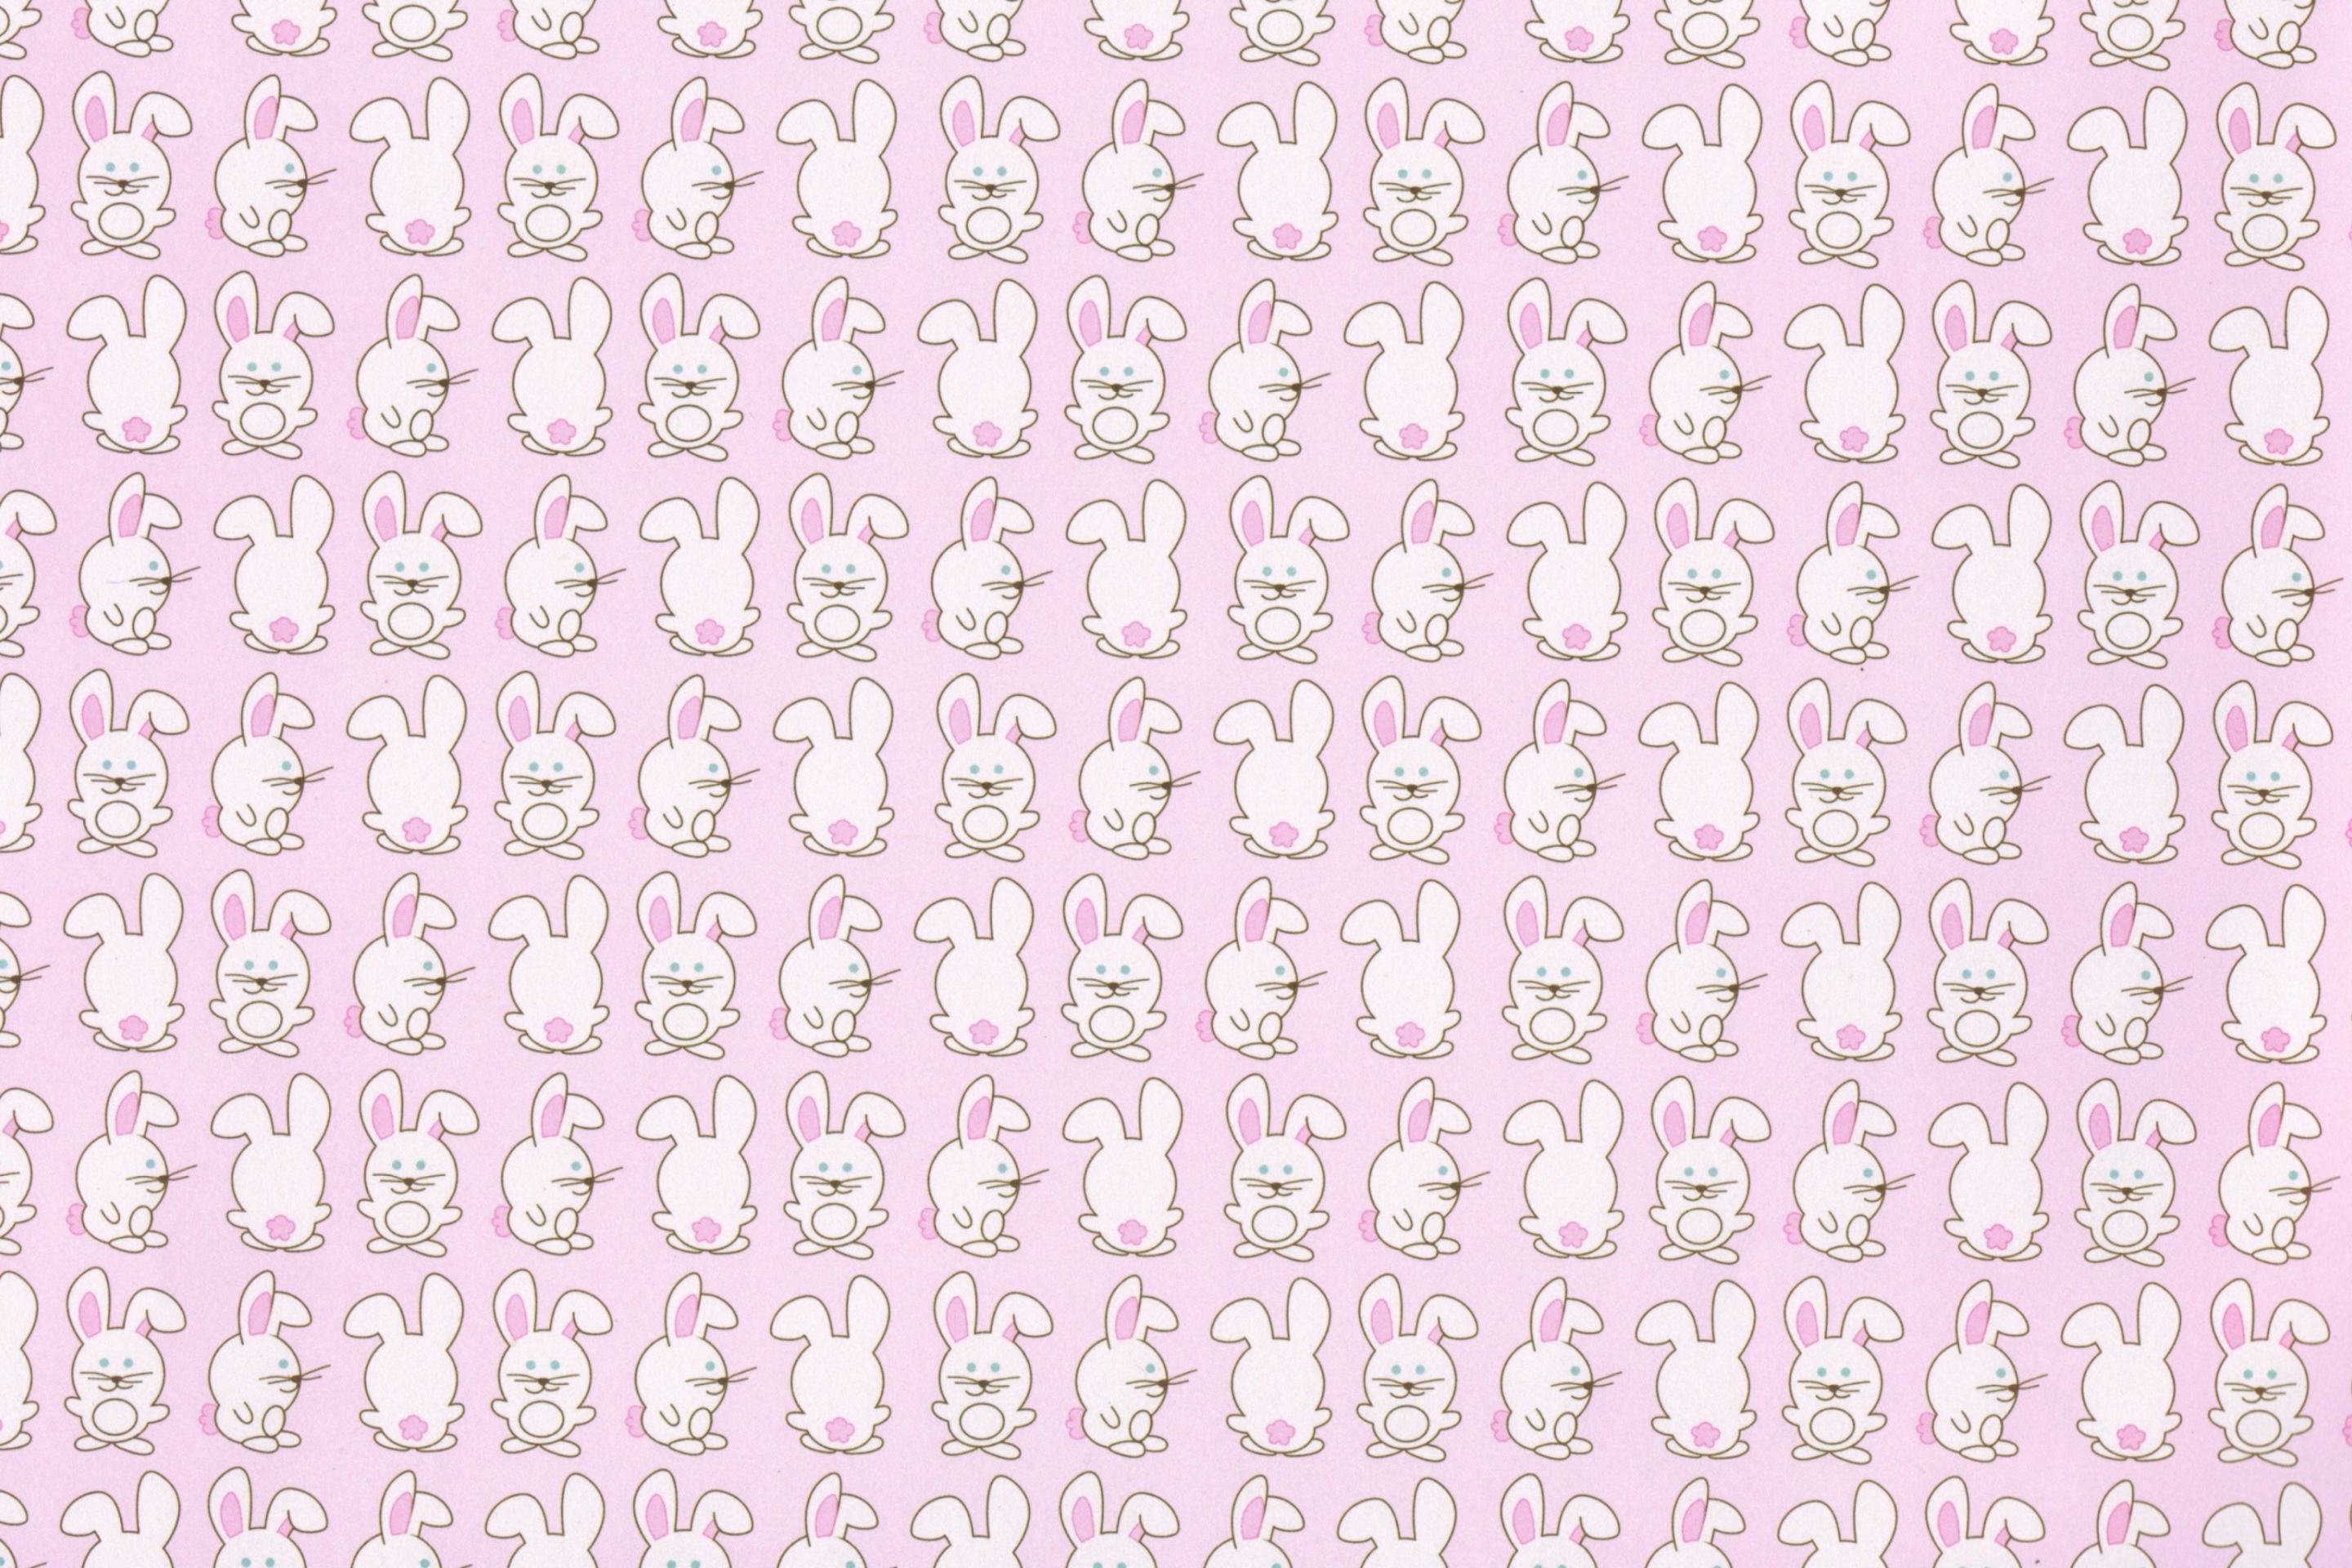 Das Pink Rabbits Wallpaper 2880x1920